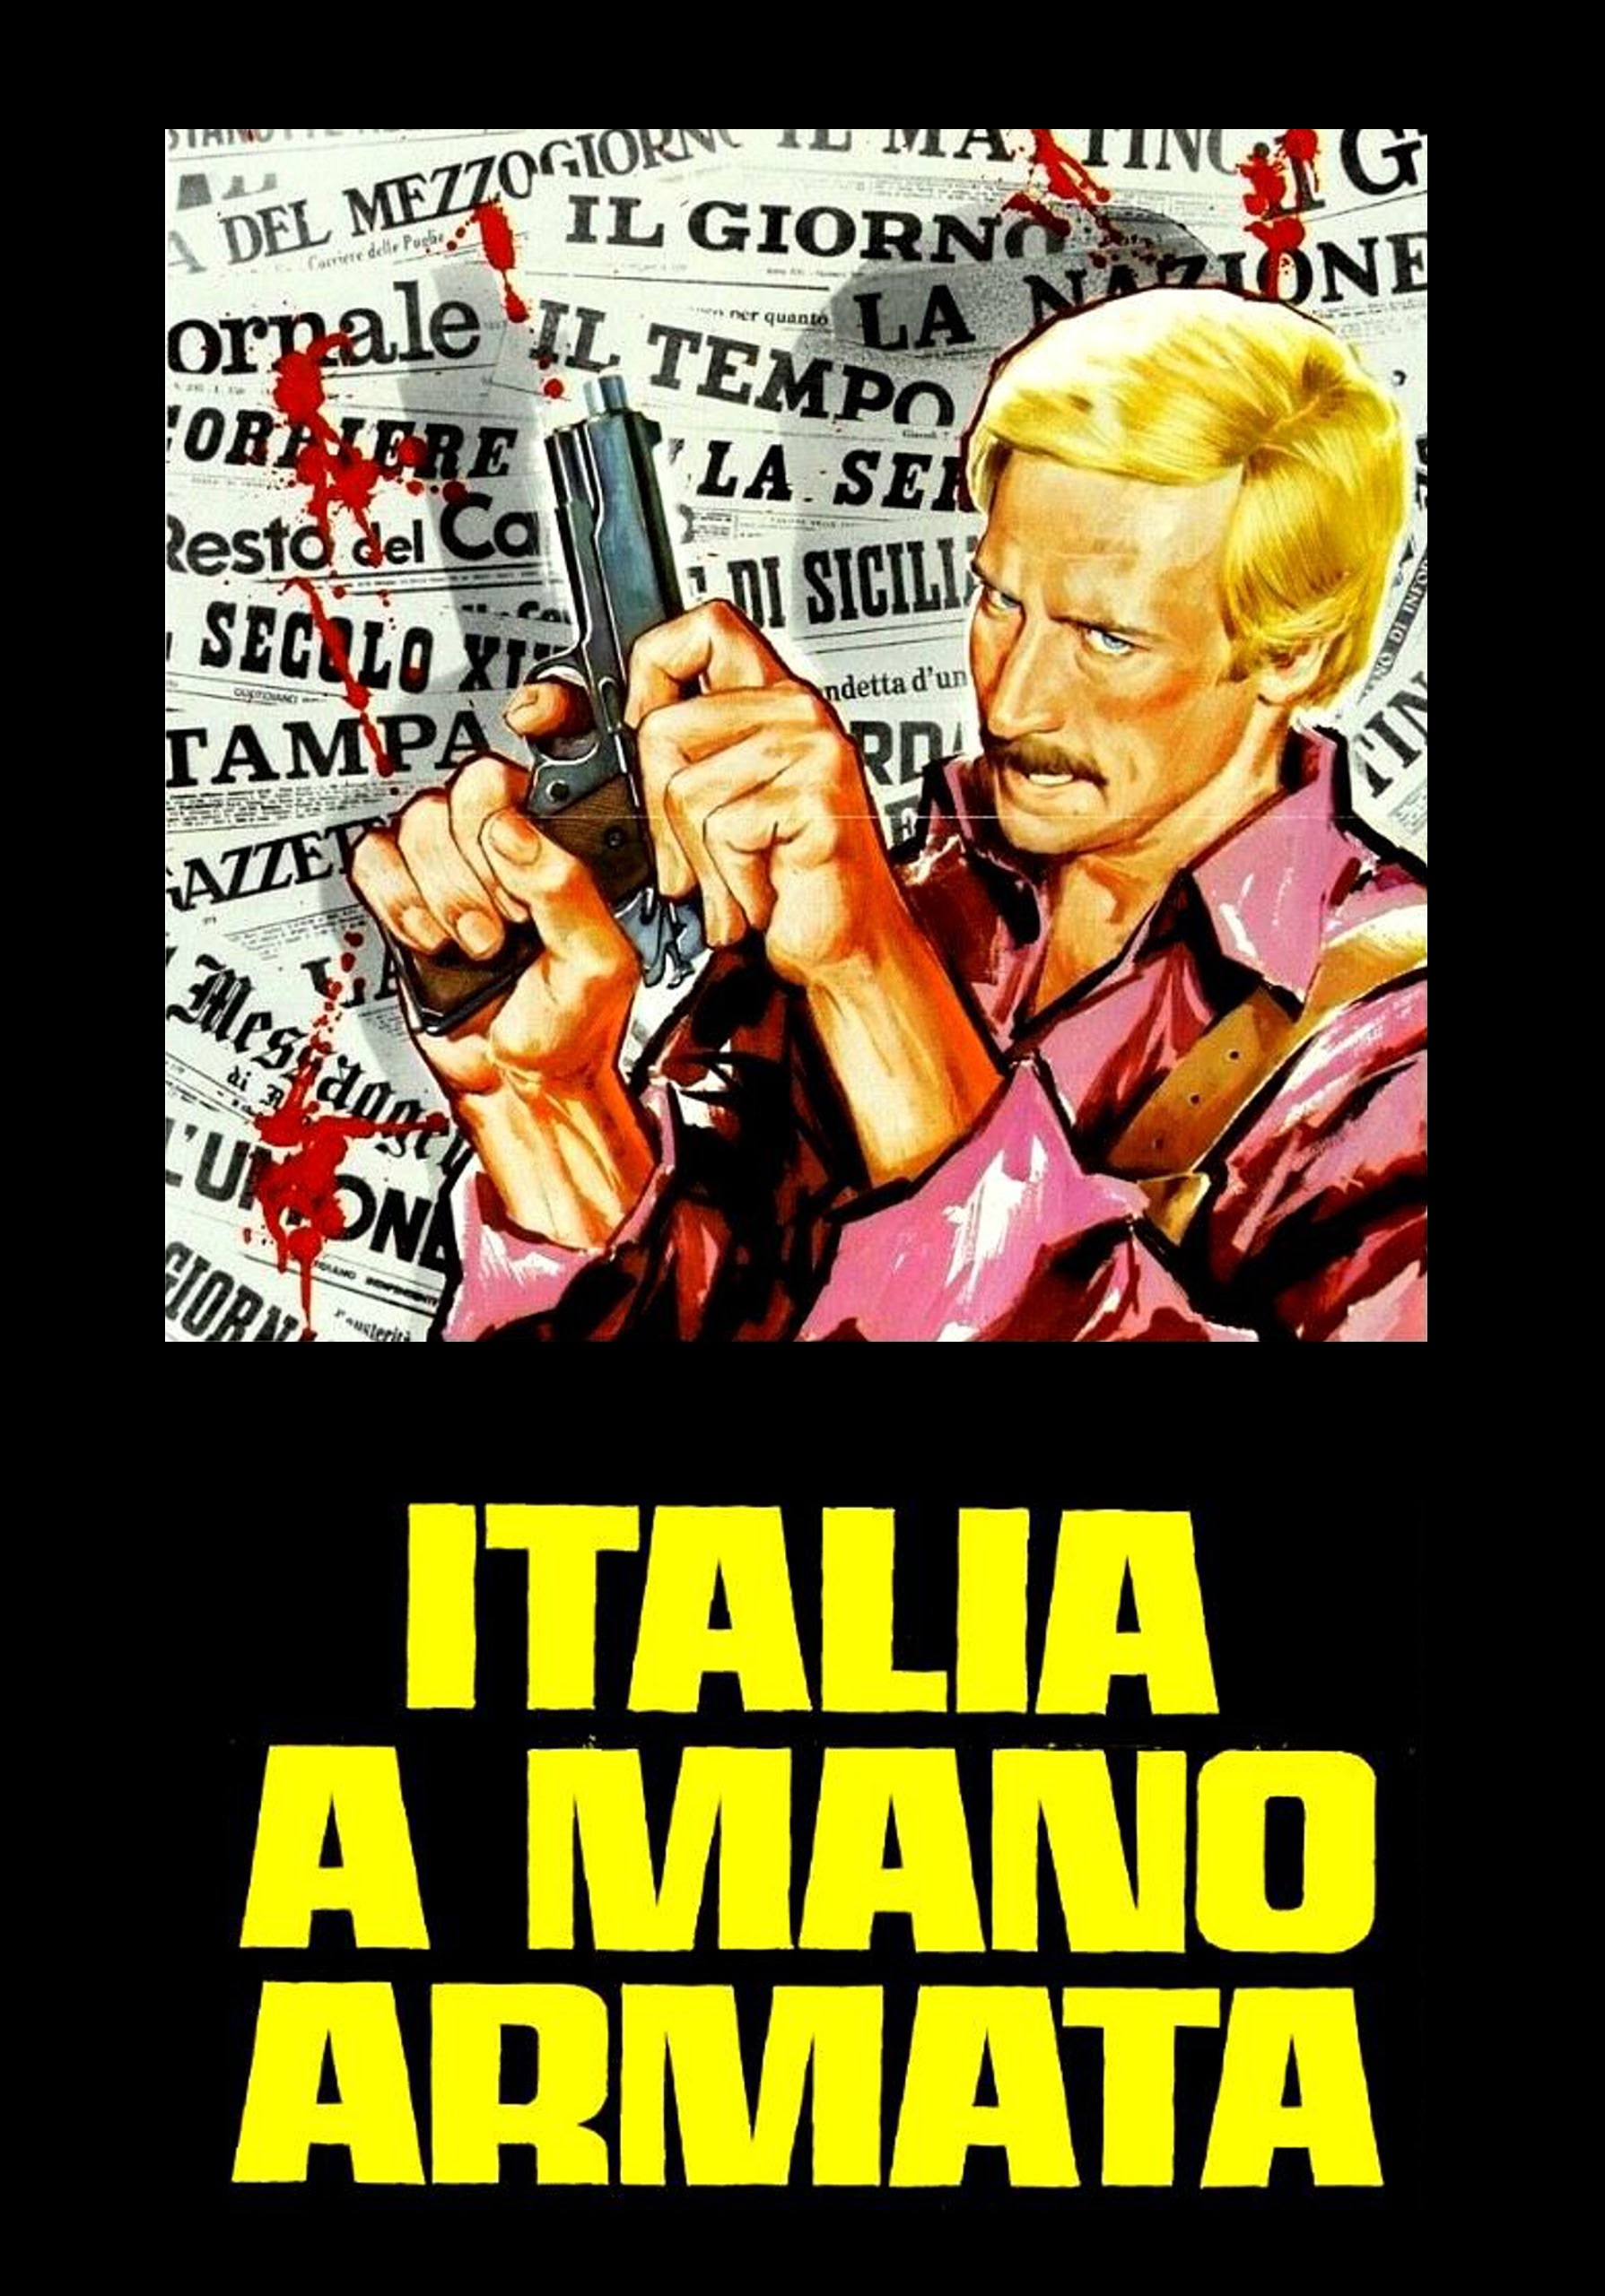 Italia a mano armata [HD] (1976)